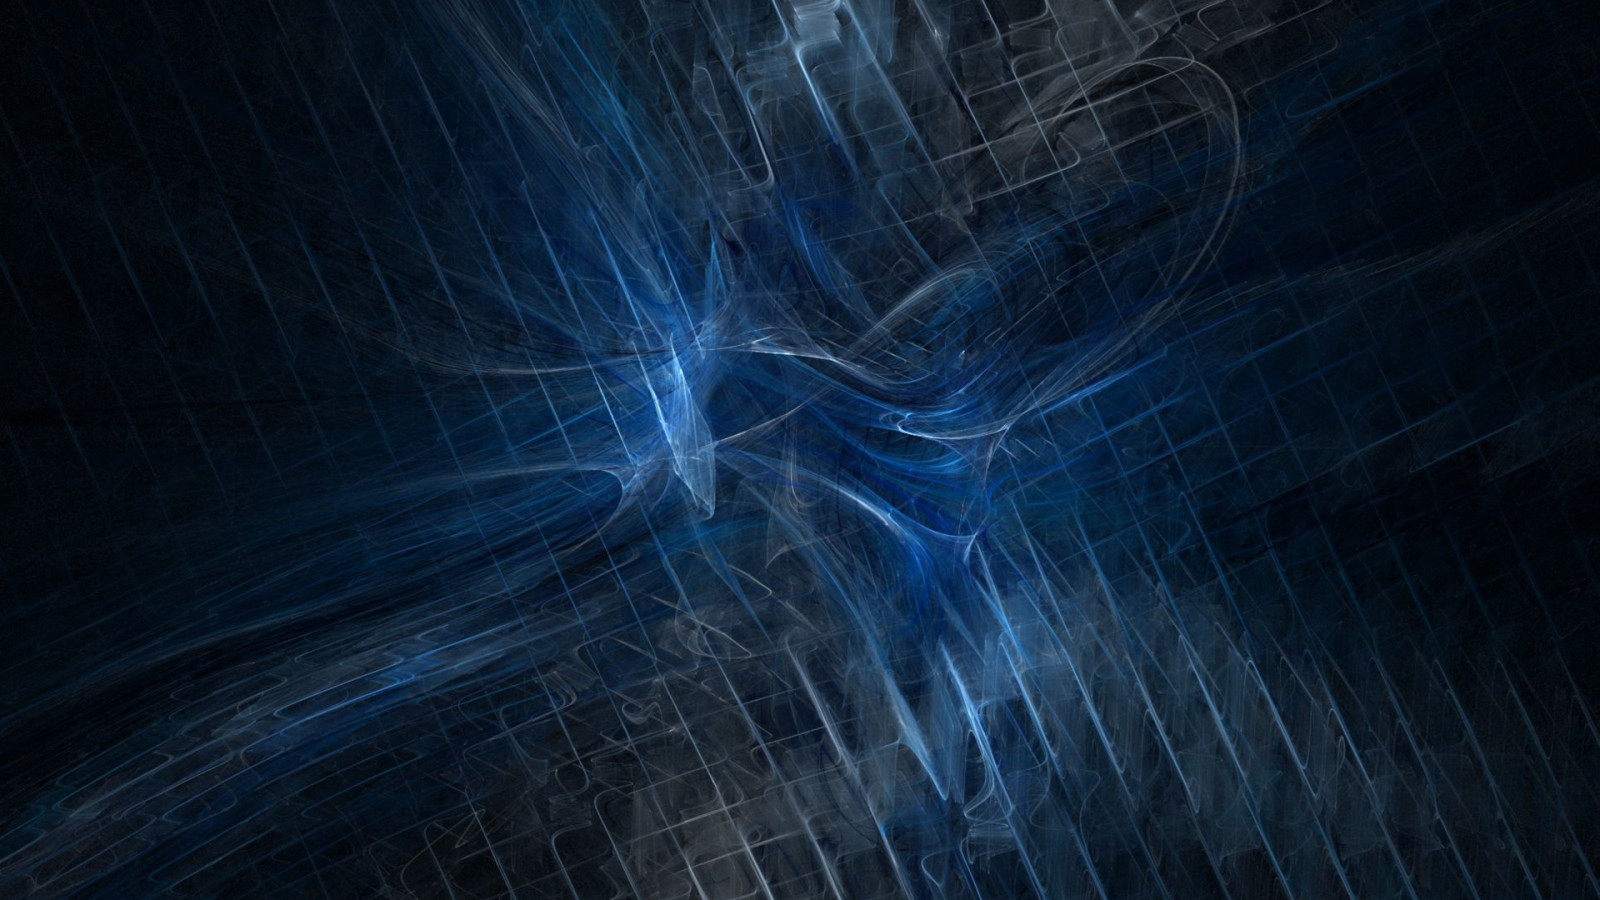 Blue Texture Abstract Wallpaper 0395